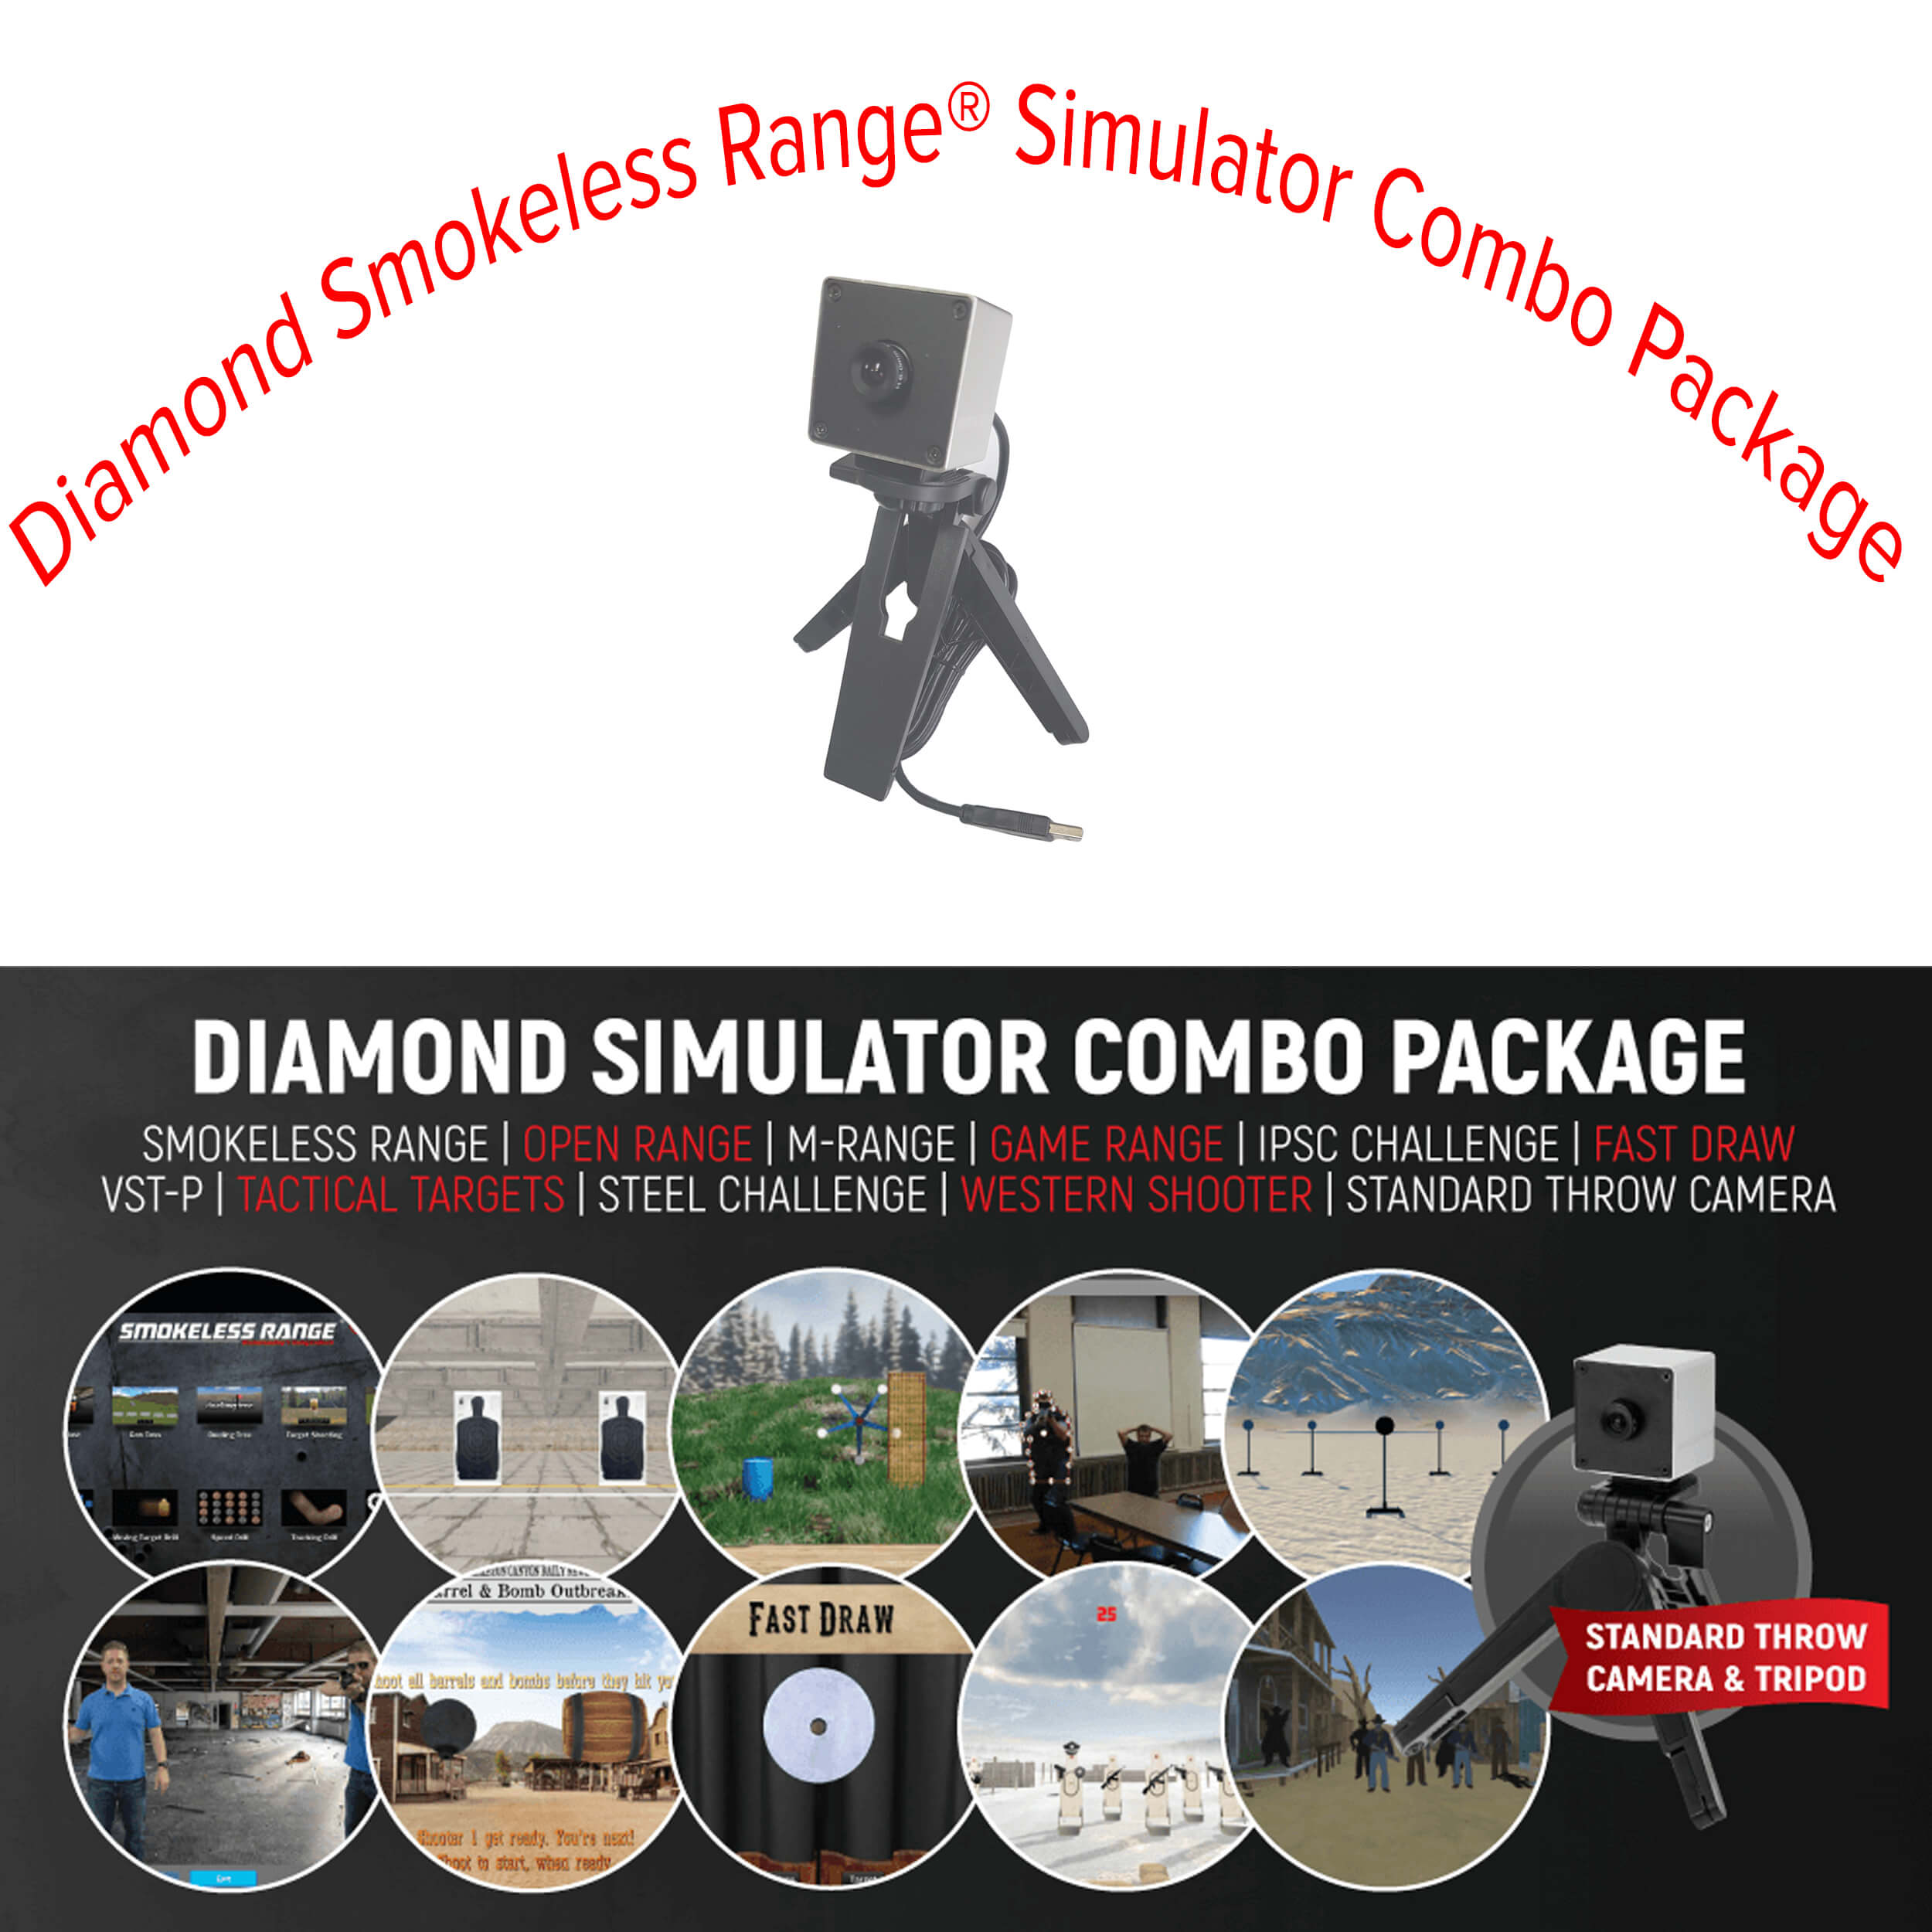 Diamond Smokeless Range ® Simulator Combo Package - DSCP002